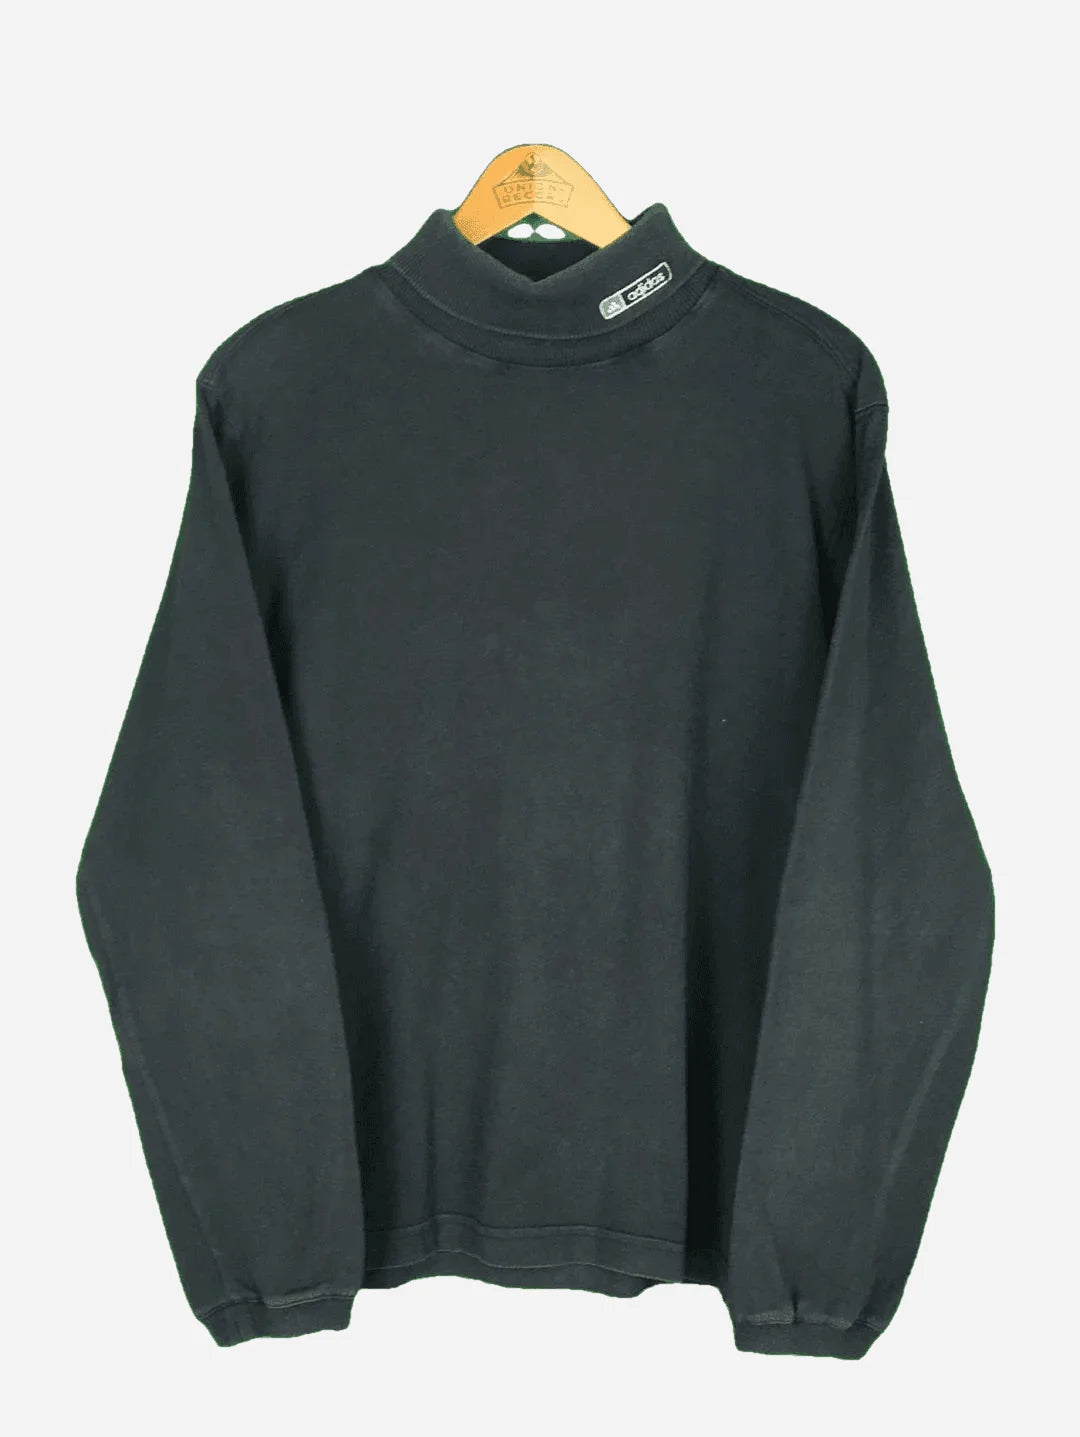 Adidas turtleneck sweater (M)